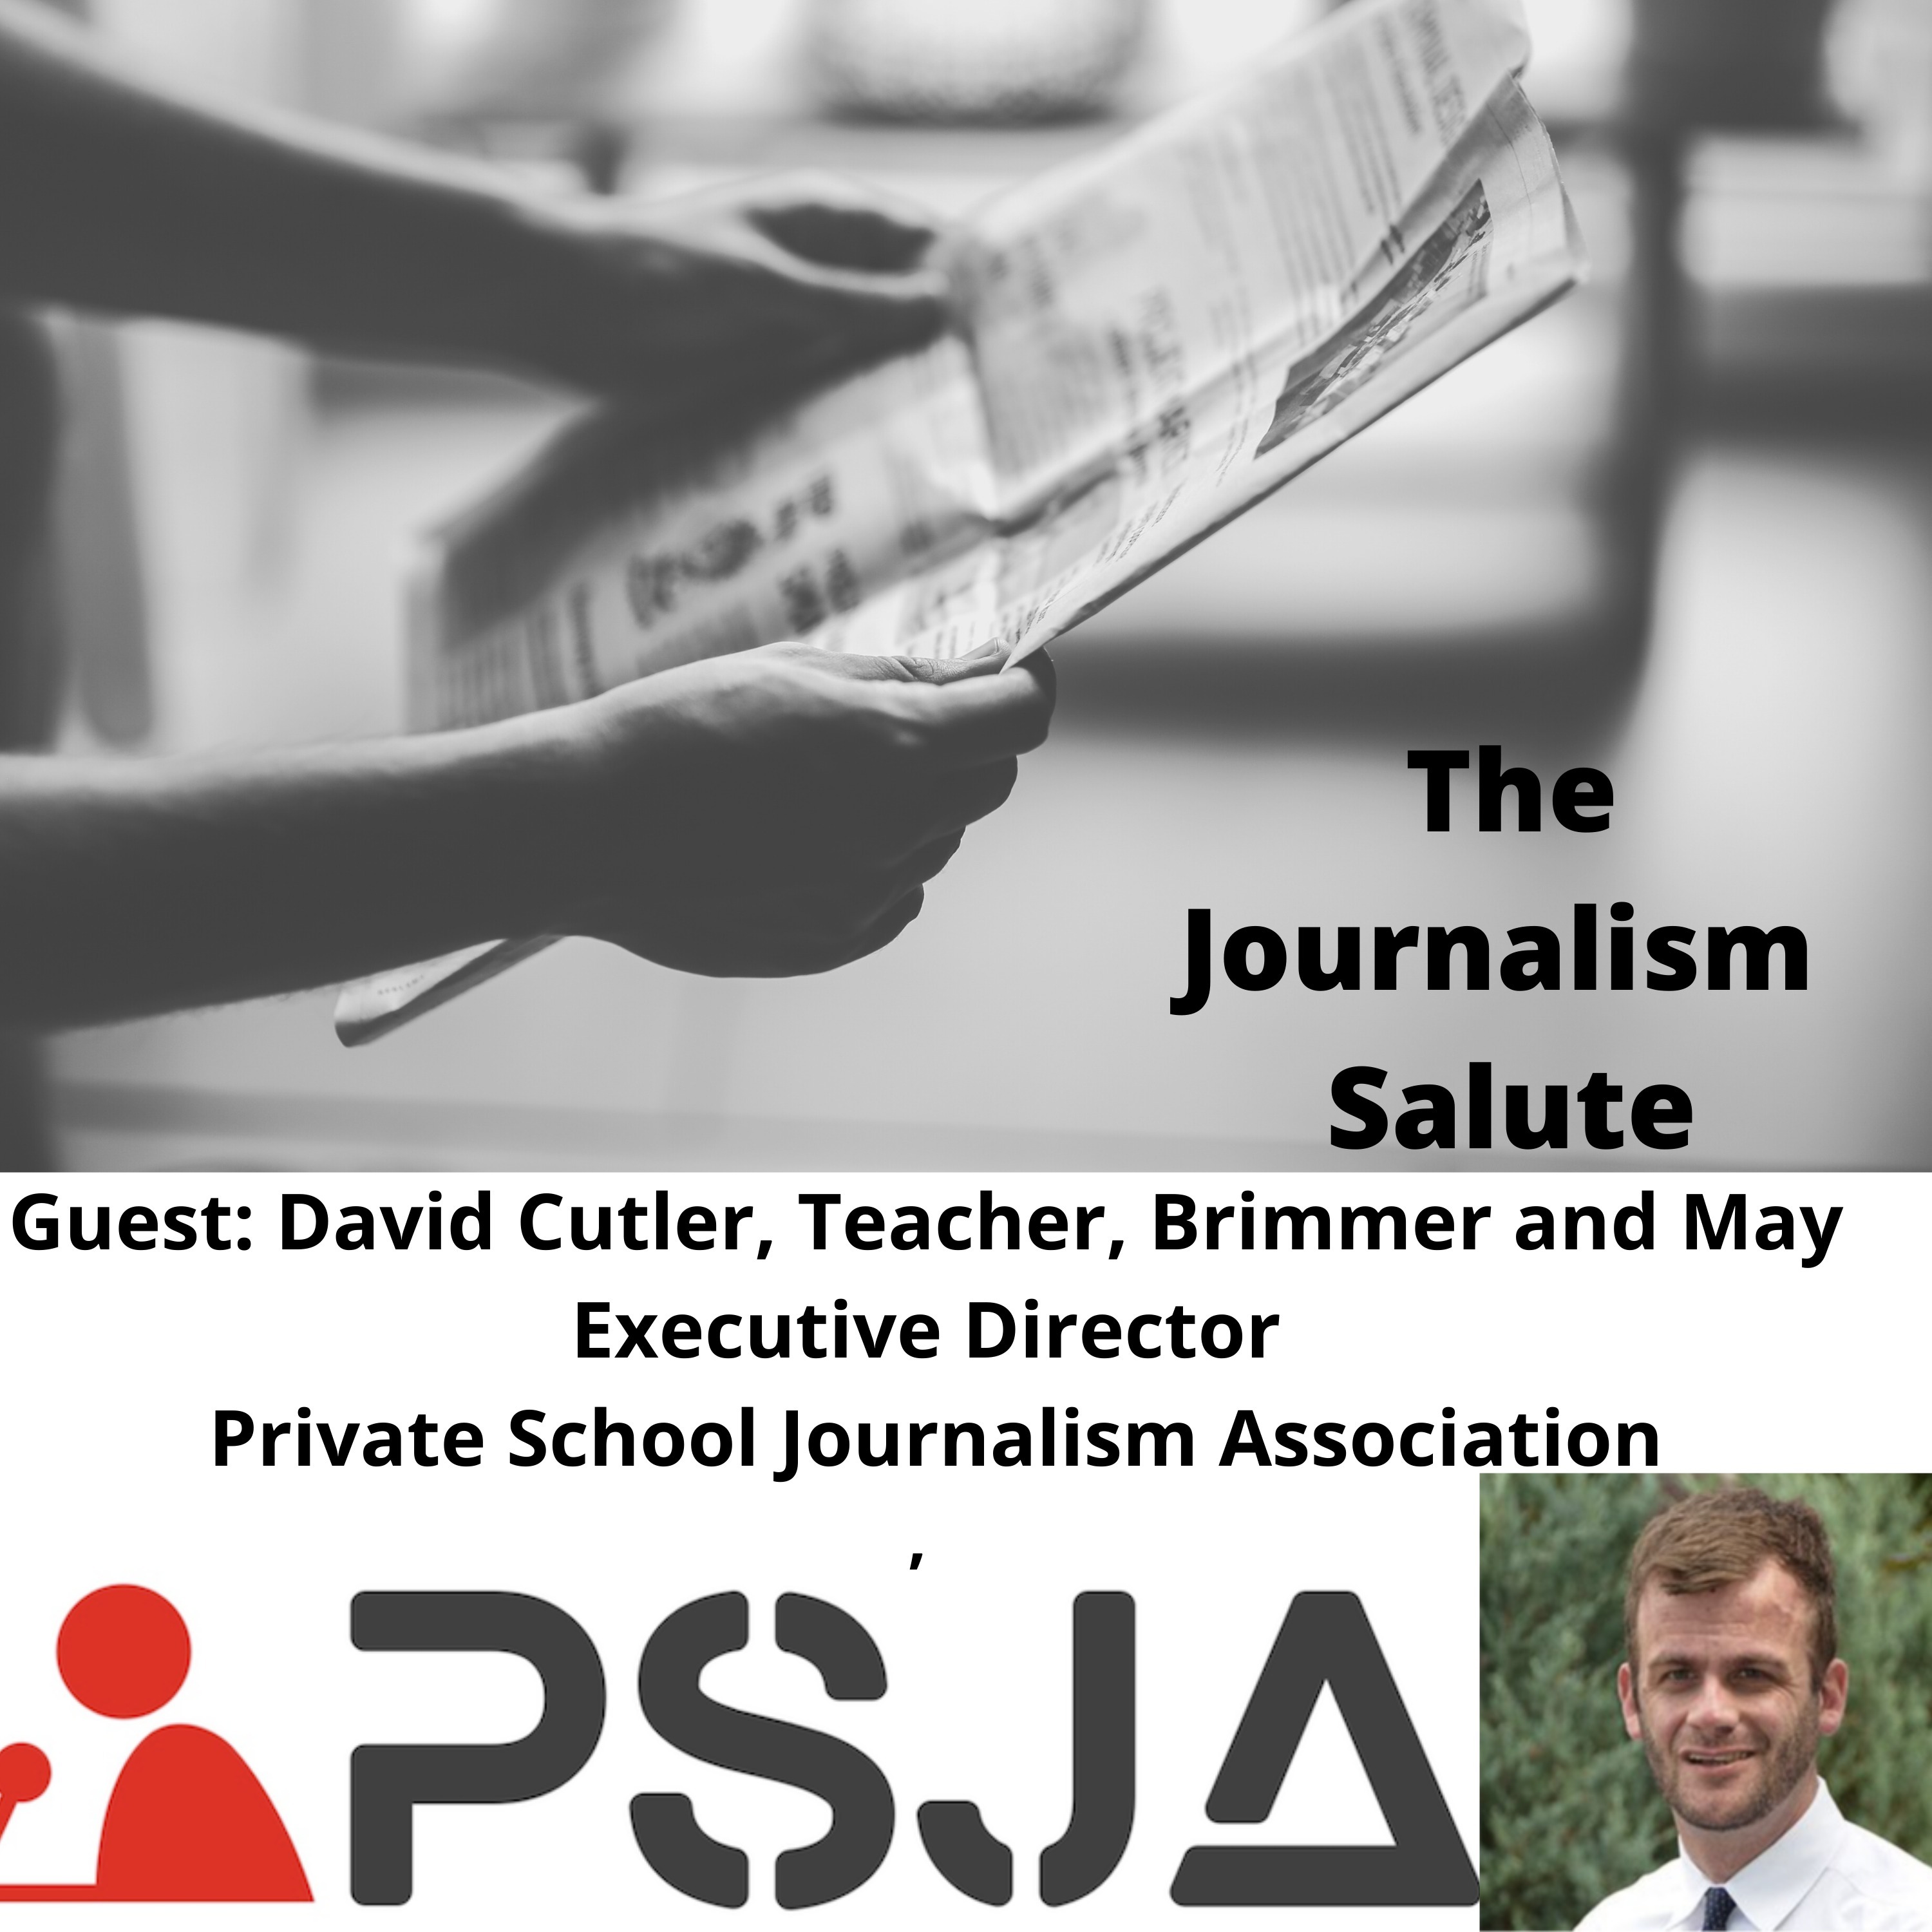 David Cutler: Teacher & Executive Director of the Private School Journalism Association